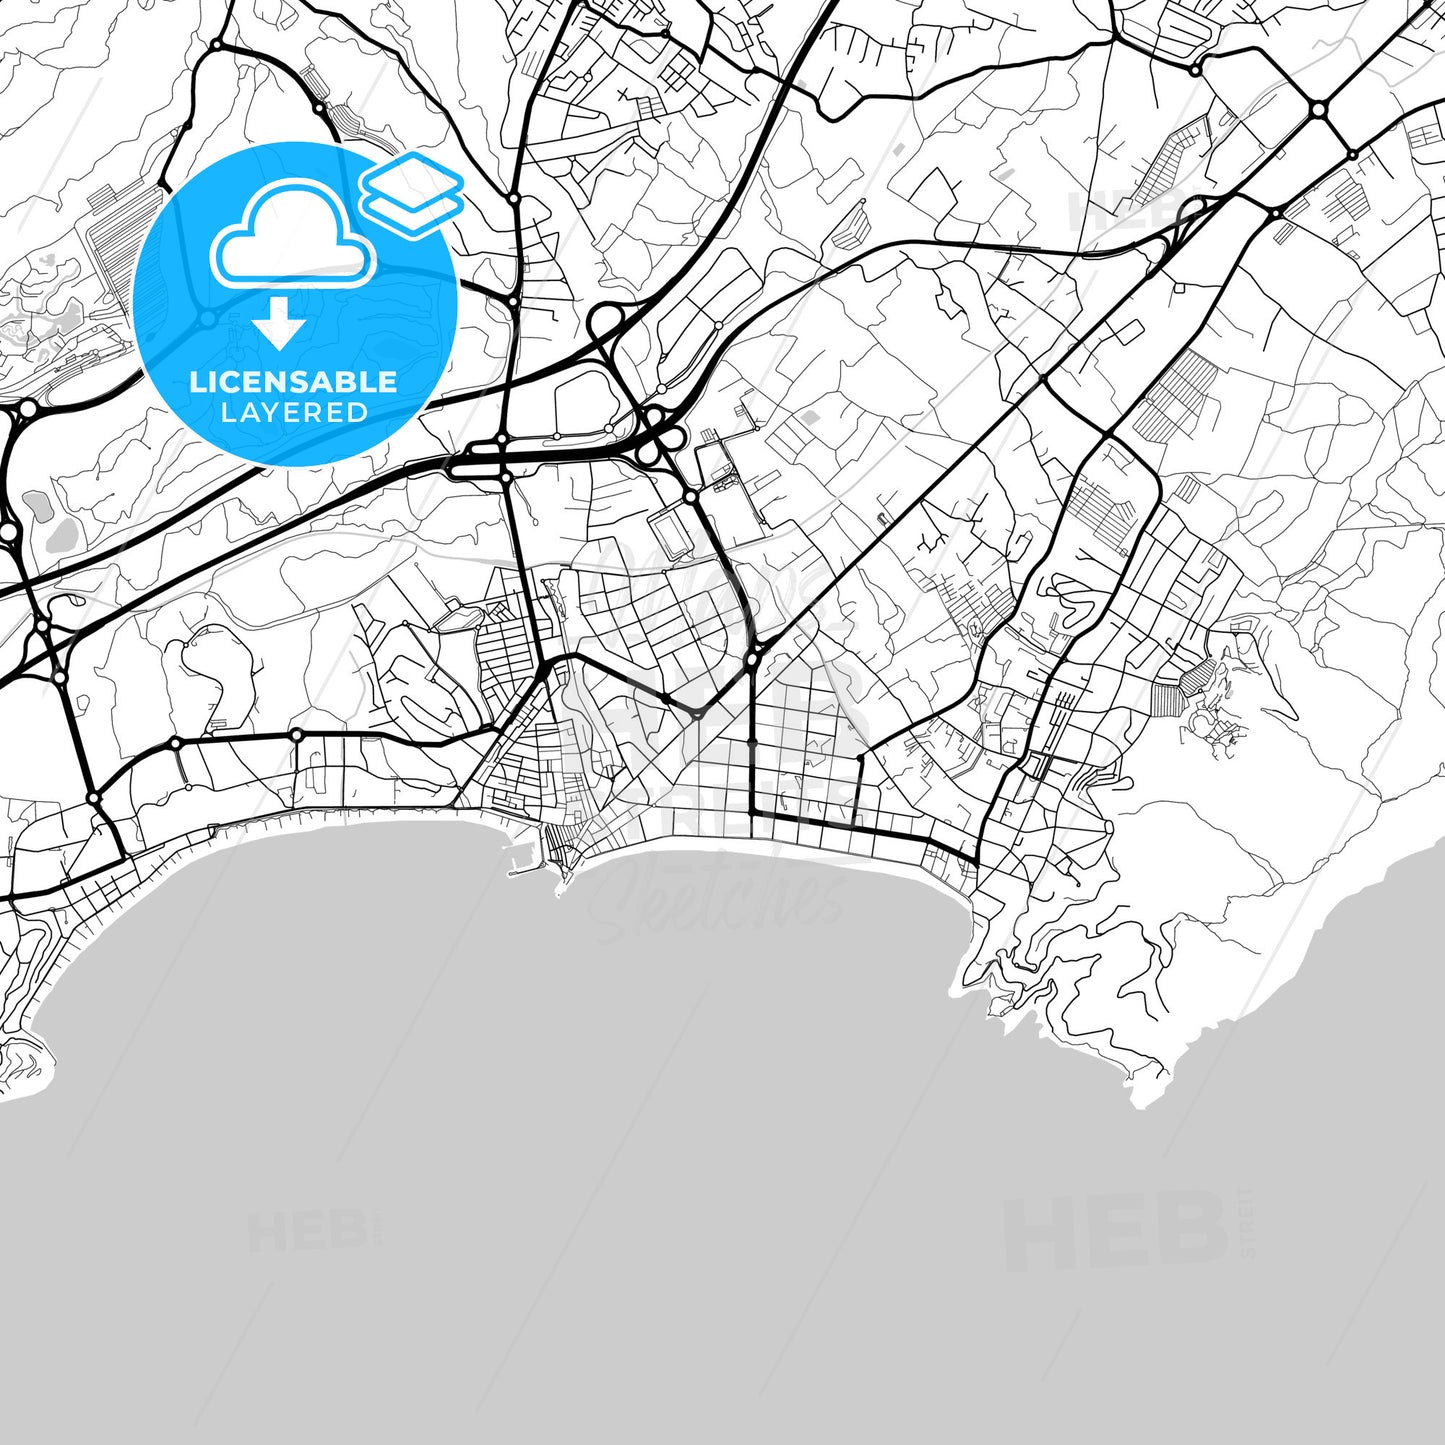 Layered PDF map of Benidorm, Alicante, Spain